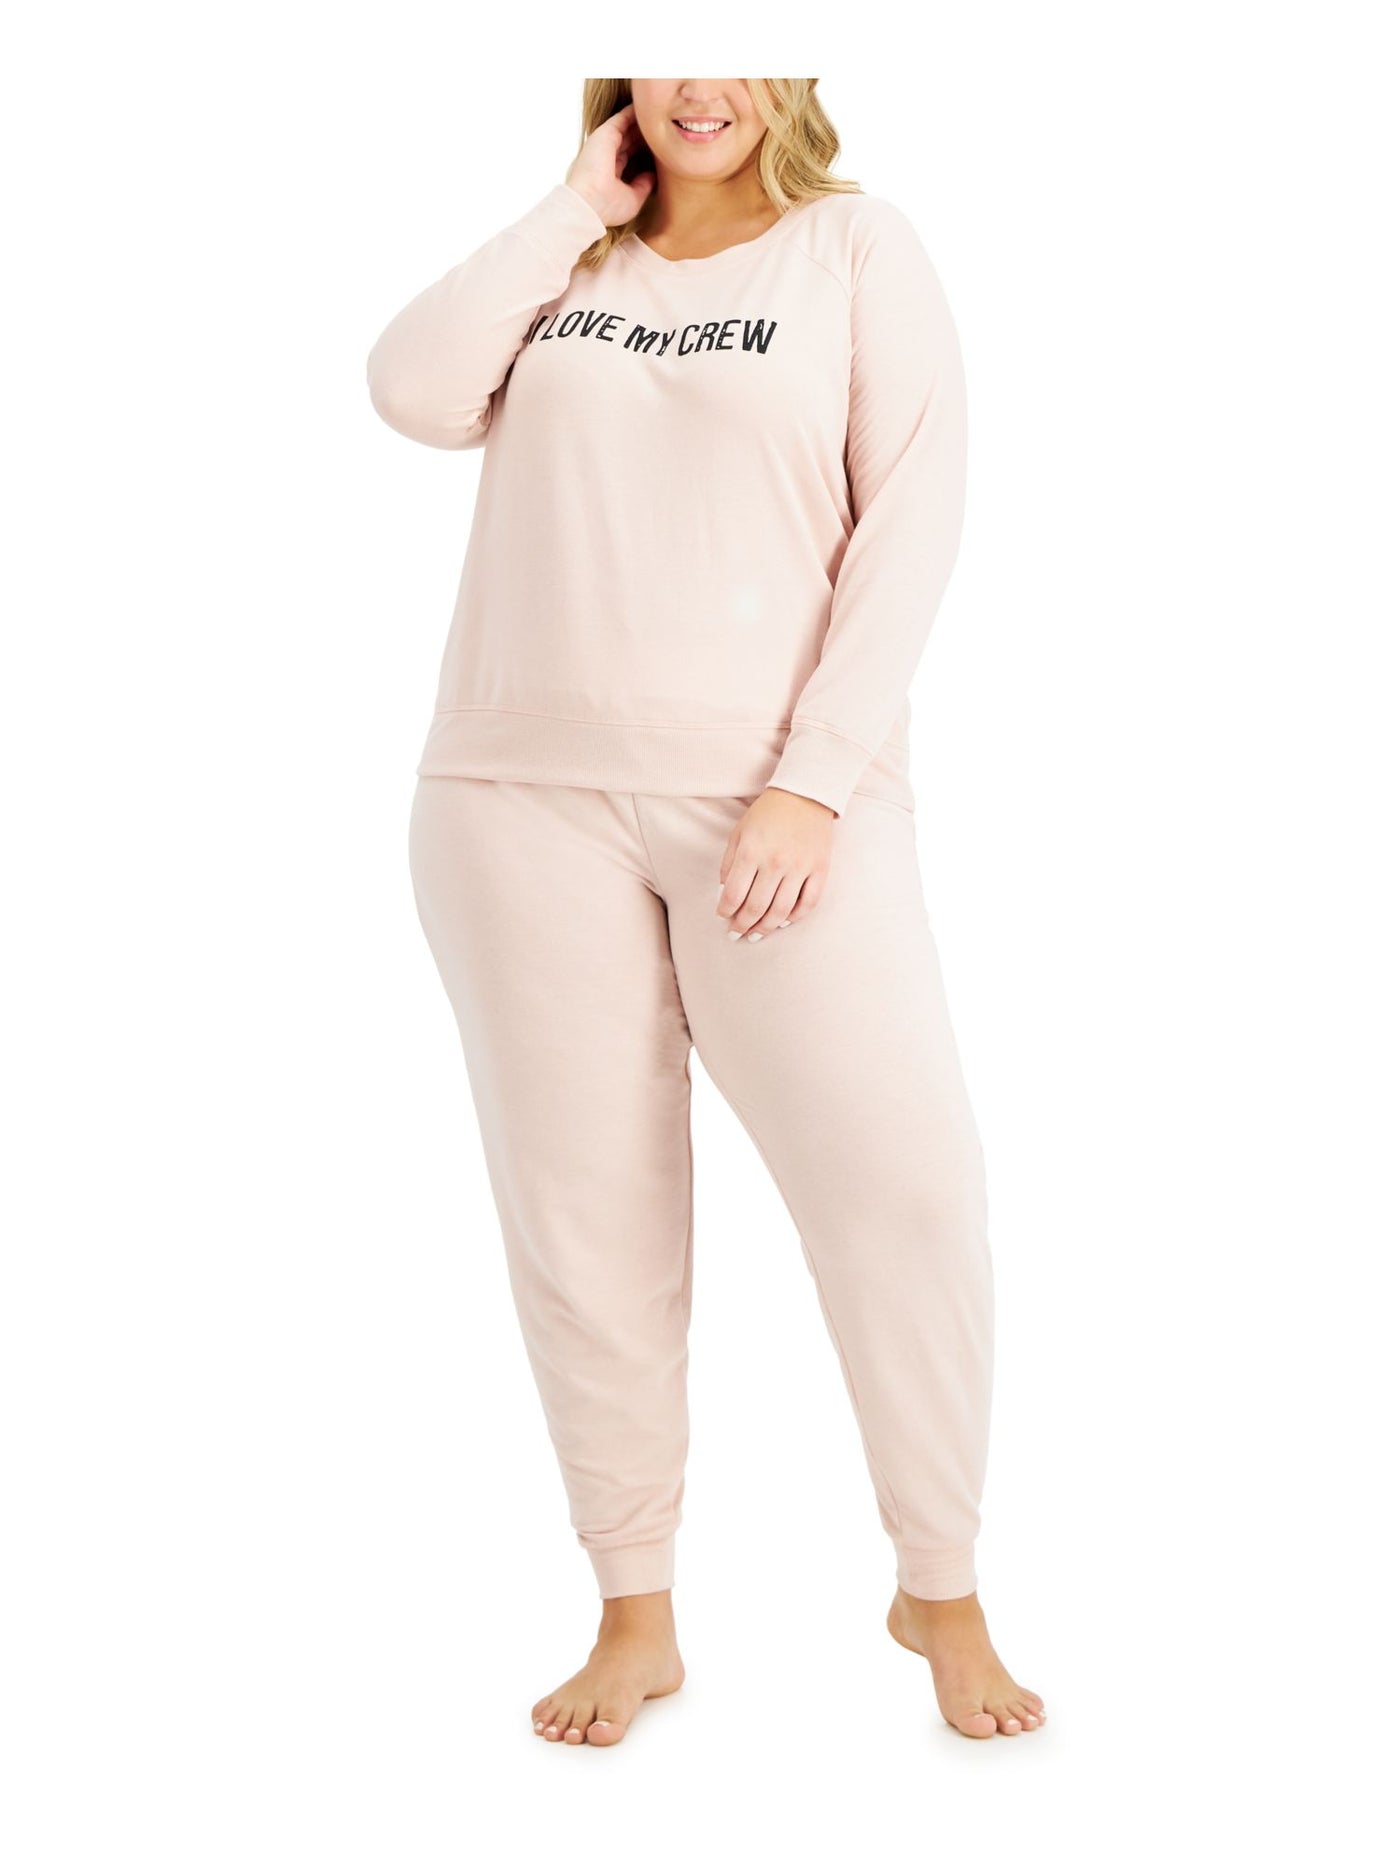 FAMILY PJs Womens Crew Love Pink Graphic Jogger Long Sleeve T-Shirt Top Cuffed Pants Pajamas Plus 2X